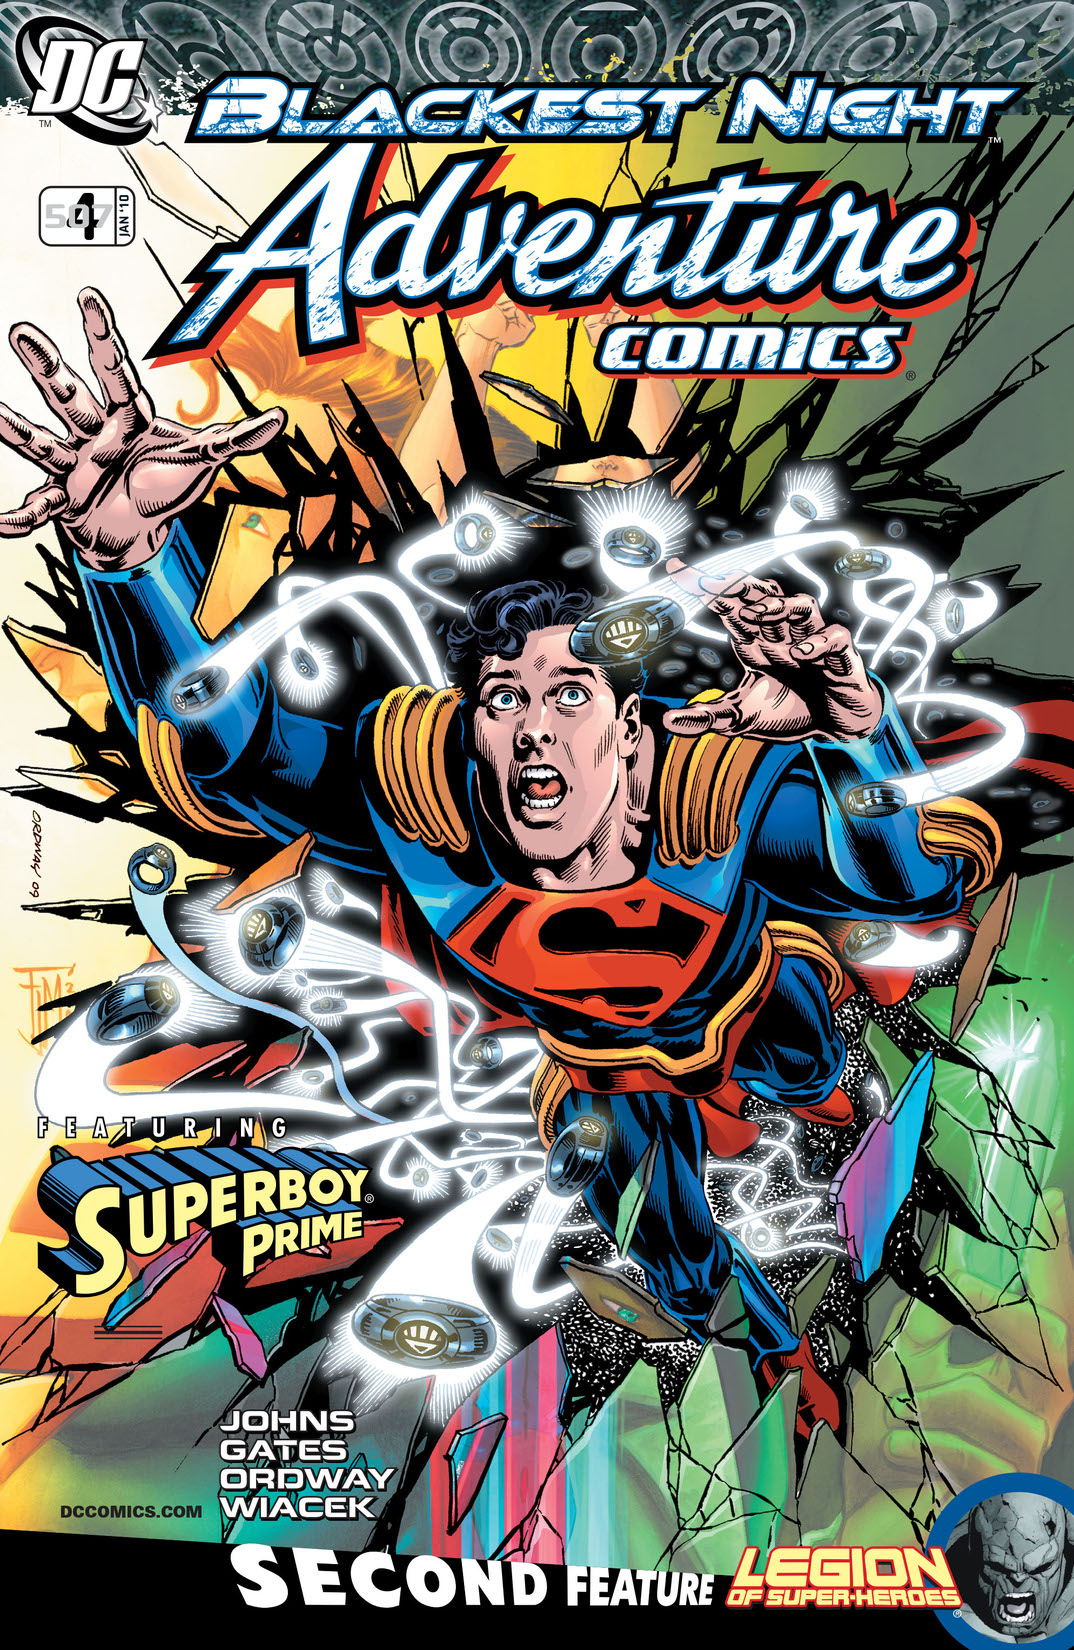 Adventure Comics (2009-) #4 preview images